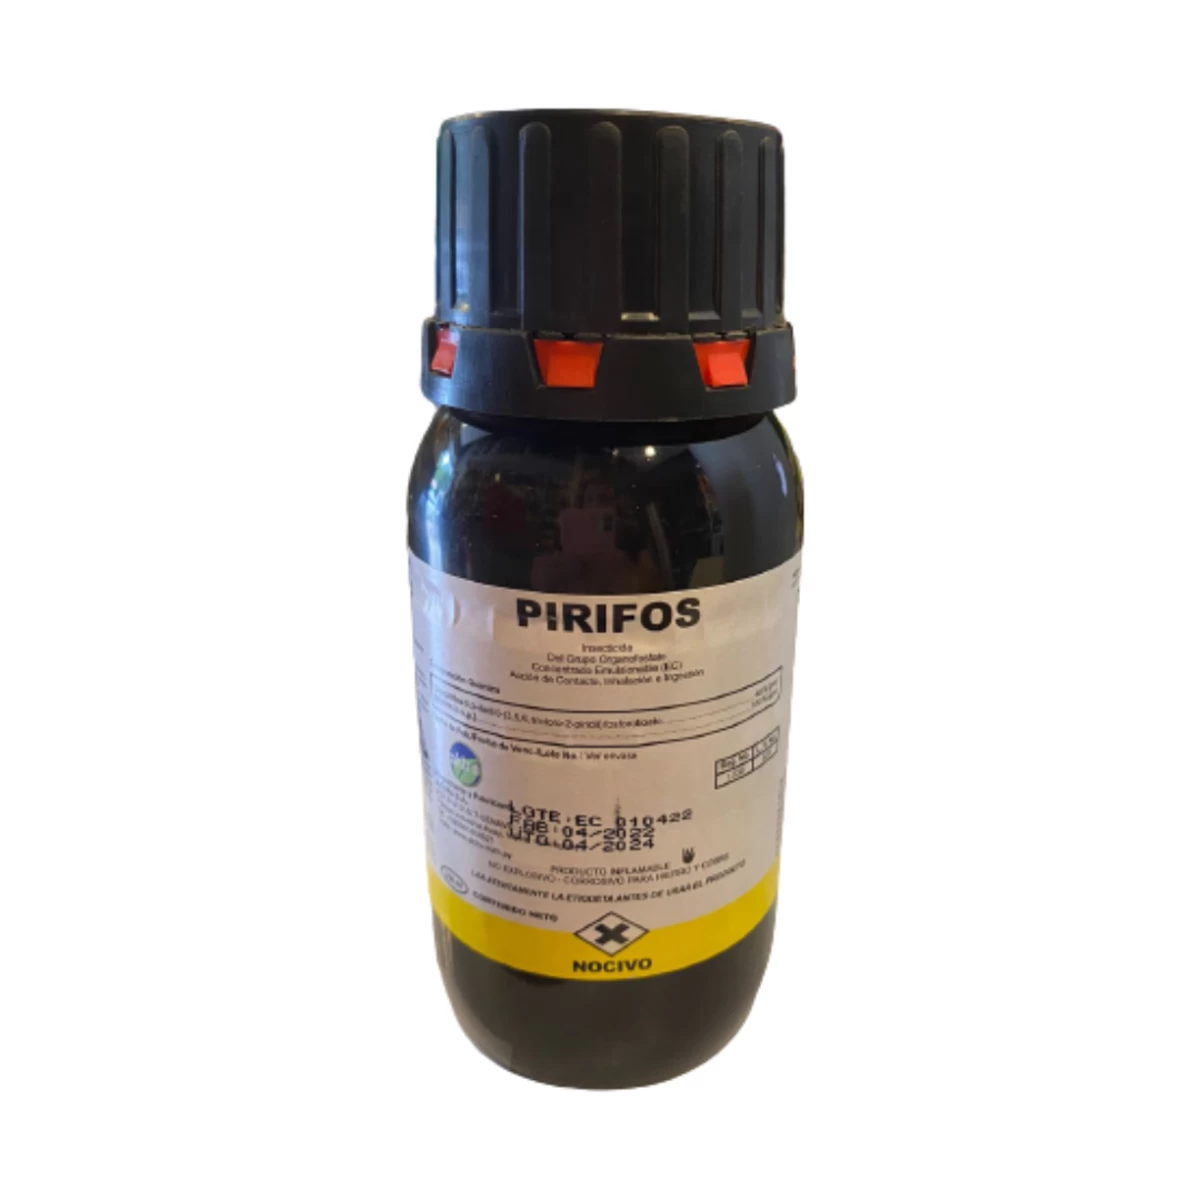 pirifos-insecticida-250ml